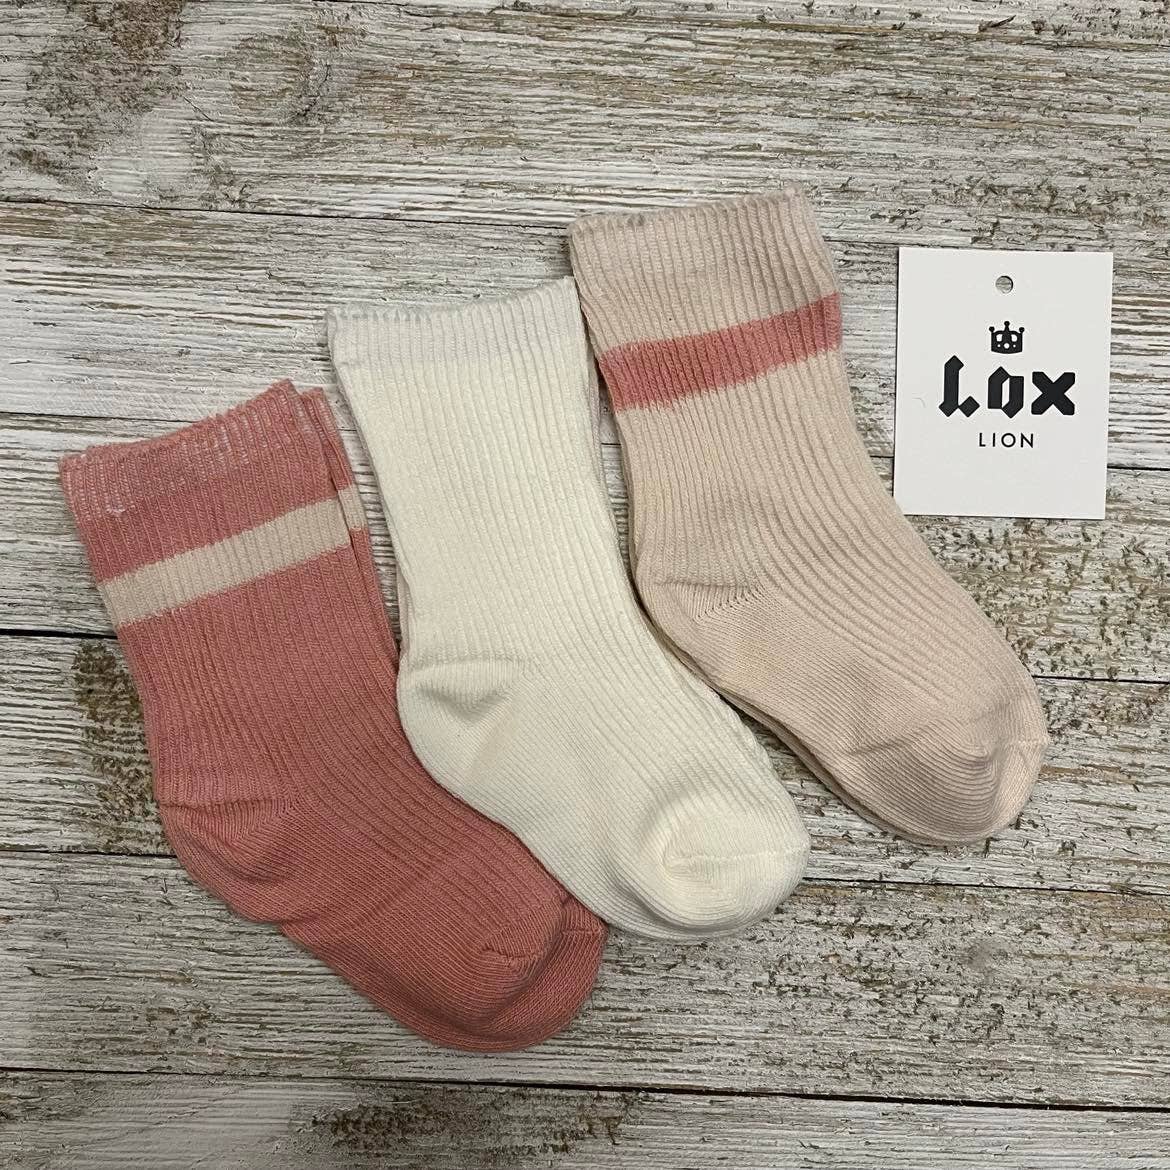 Lox Lion Organic socks for babies - 3 pack